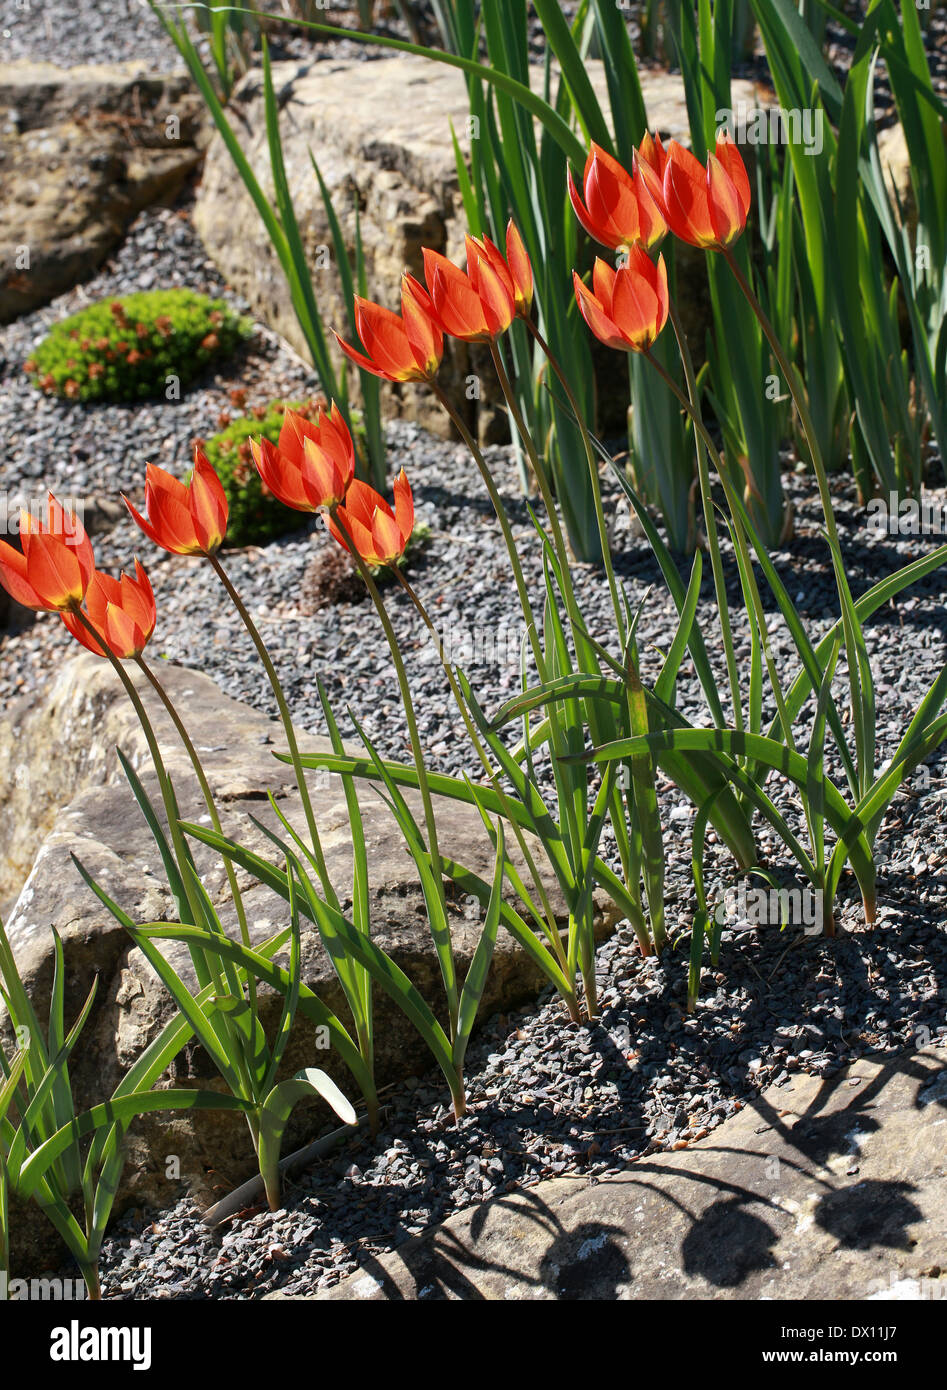 Species Tulip, Tulipa whittallii, Liliaceae. Turkey. Stock Photo